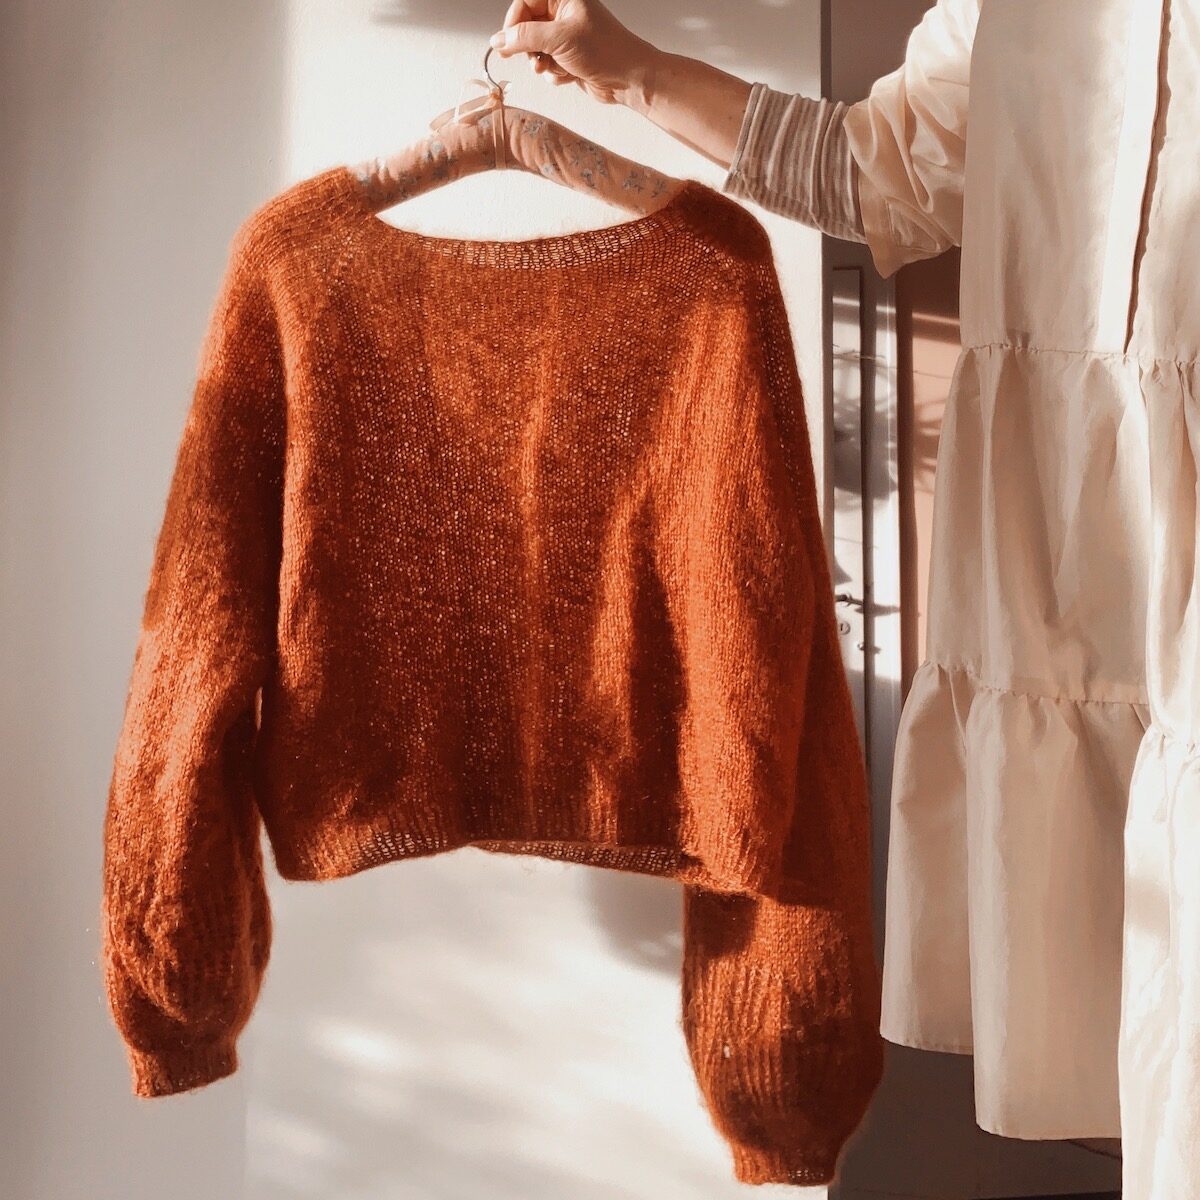 knitnite strikkeblog skinhussweater